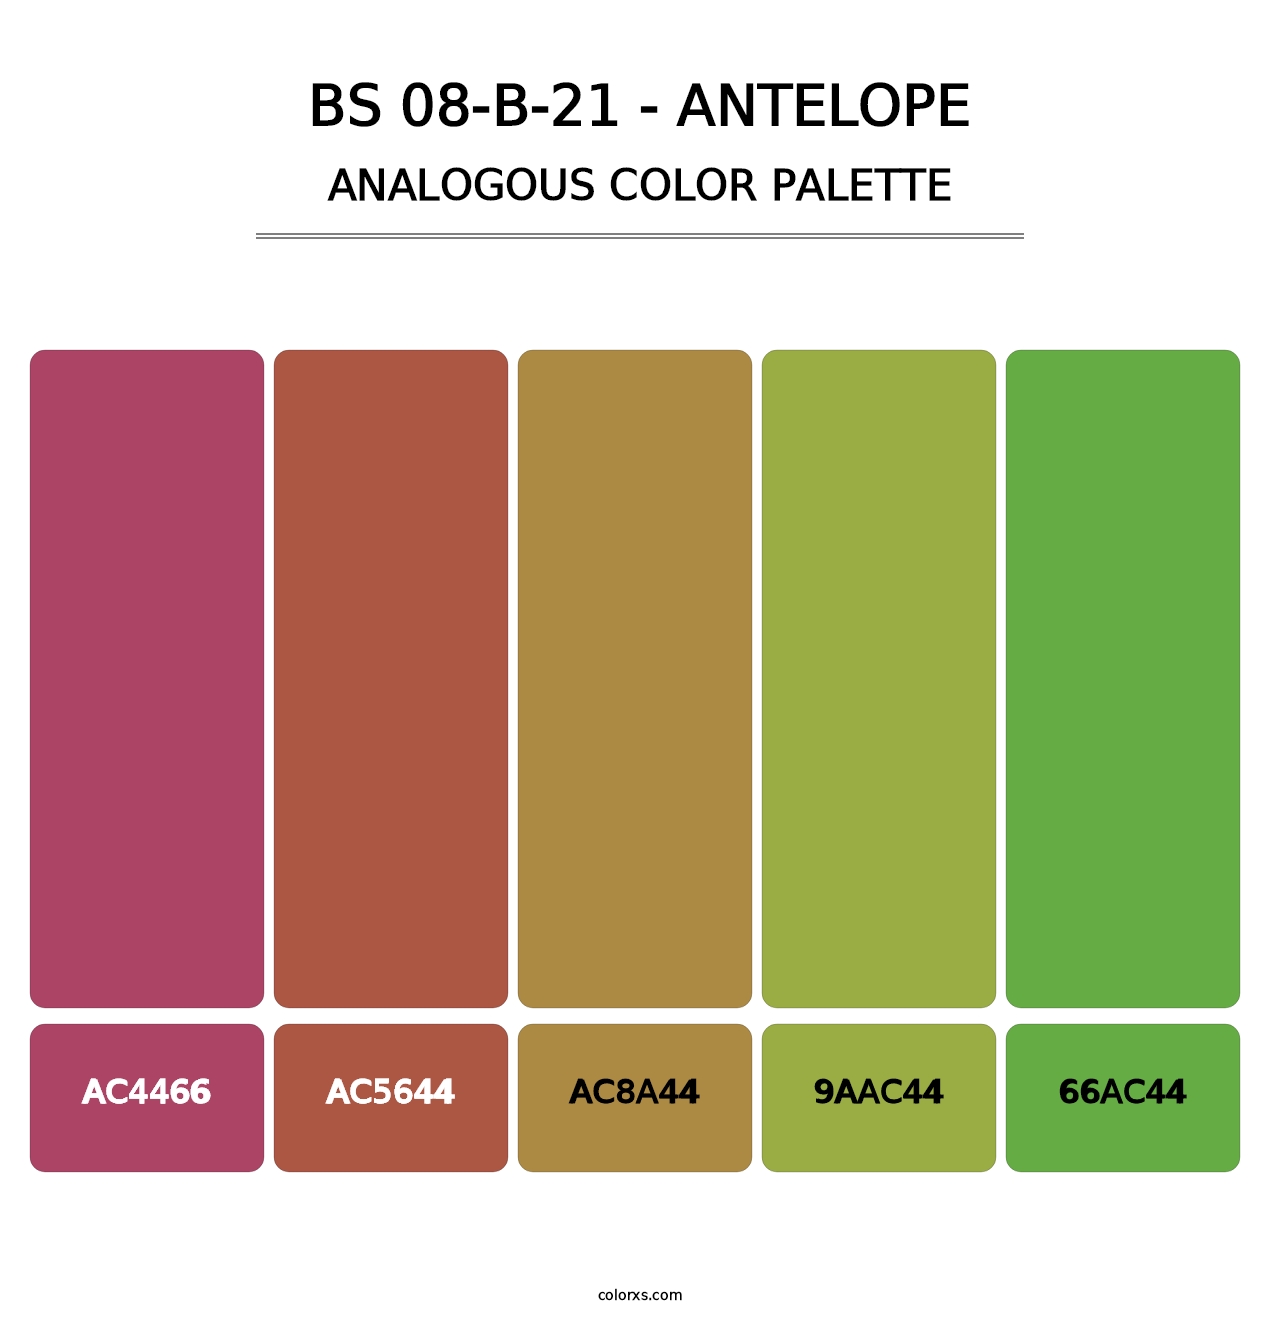 BS 08-B-21 - Antelope - Analogous Color Palette